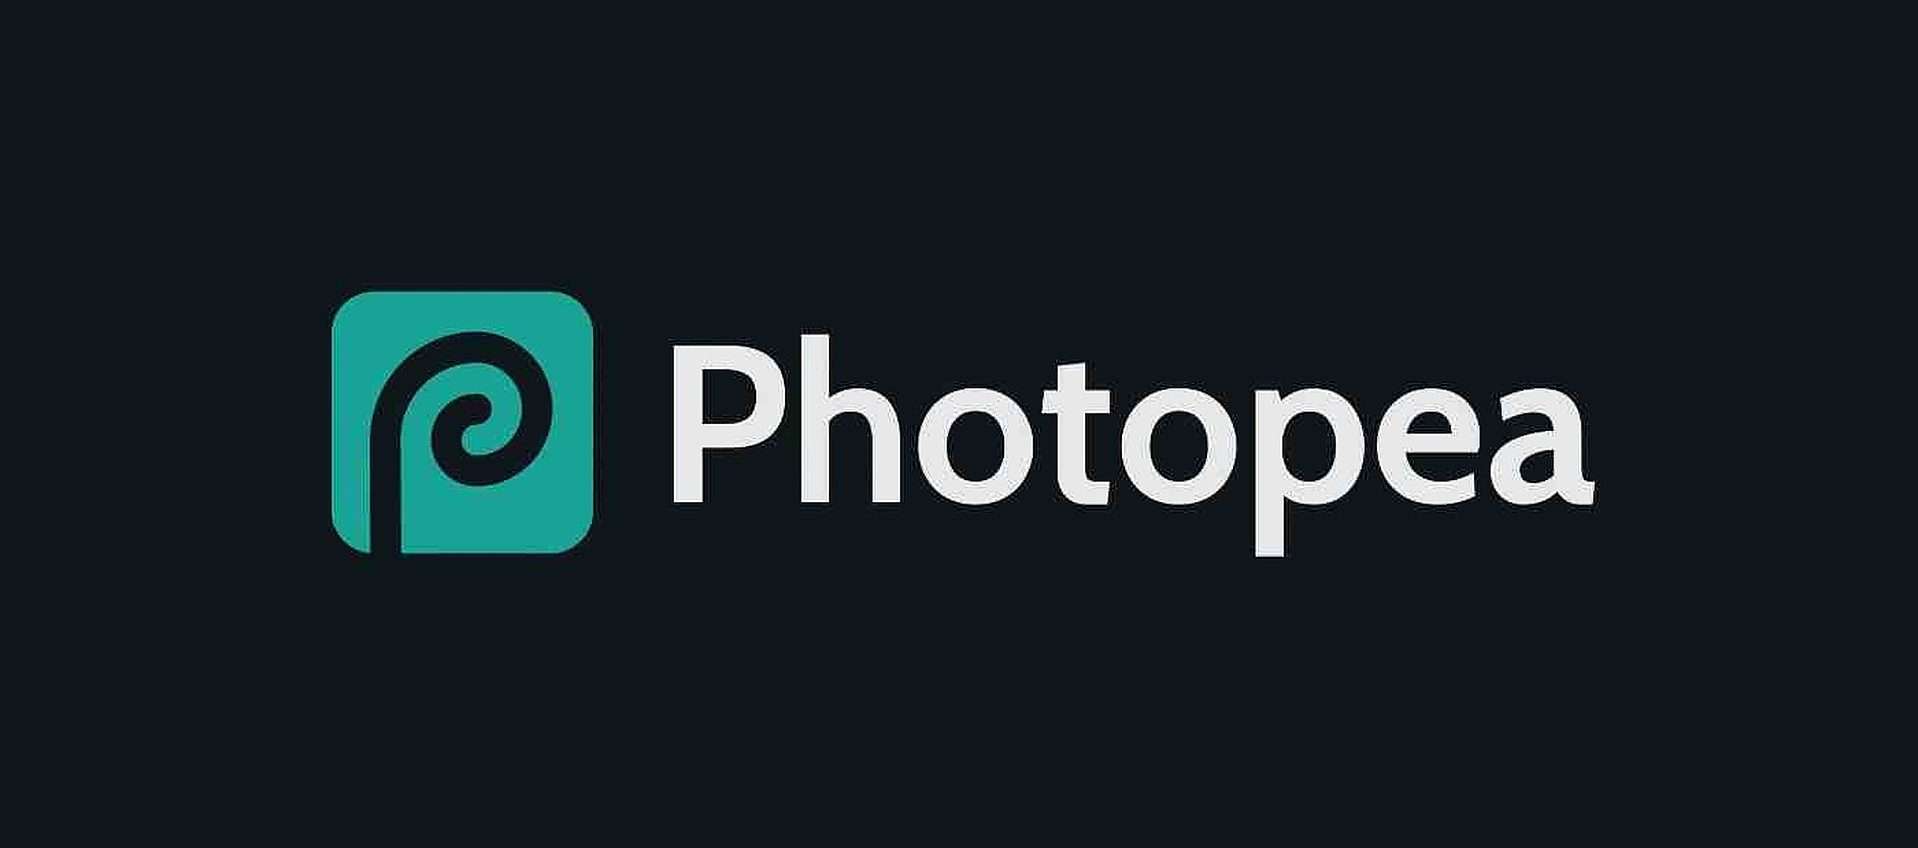 Photopea: l'alternativa gratuita a Photoshop